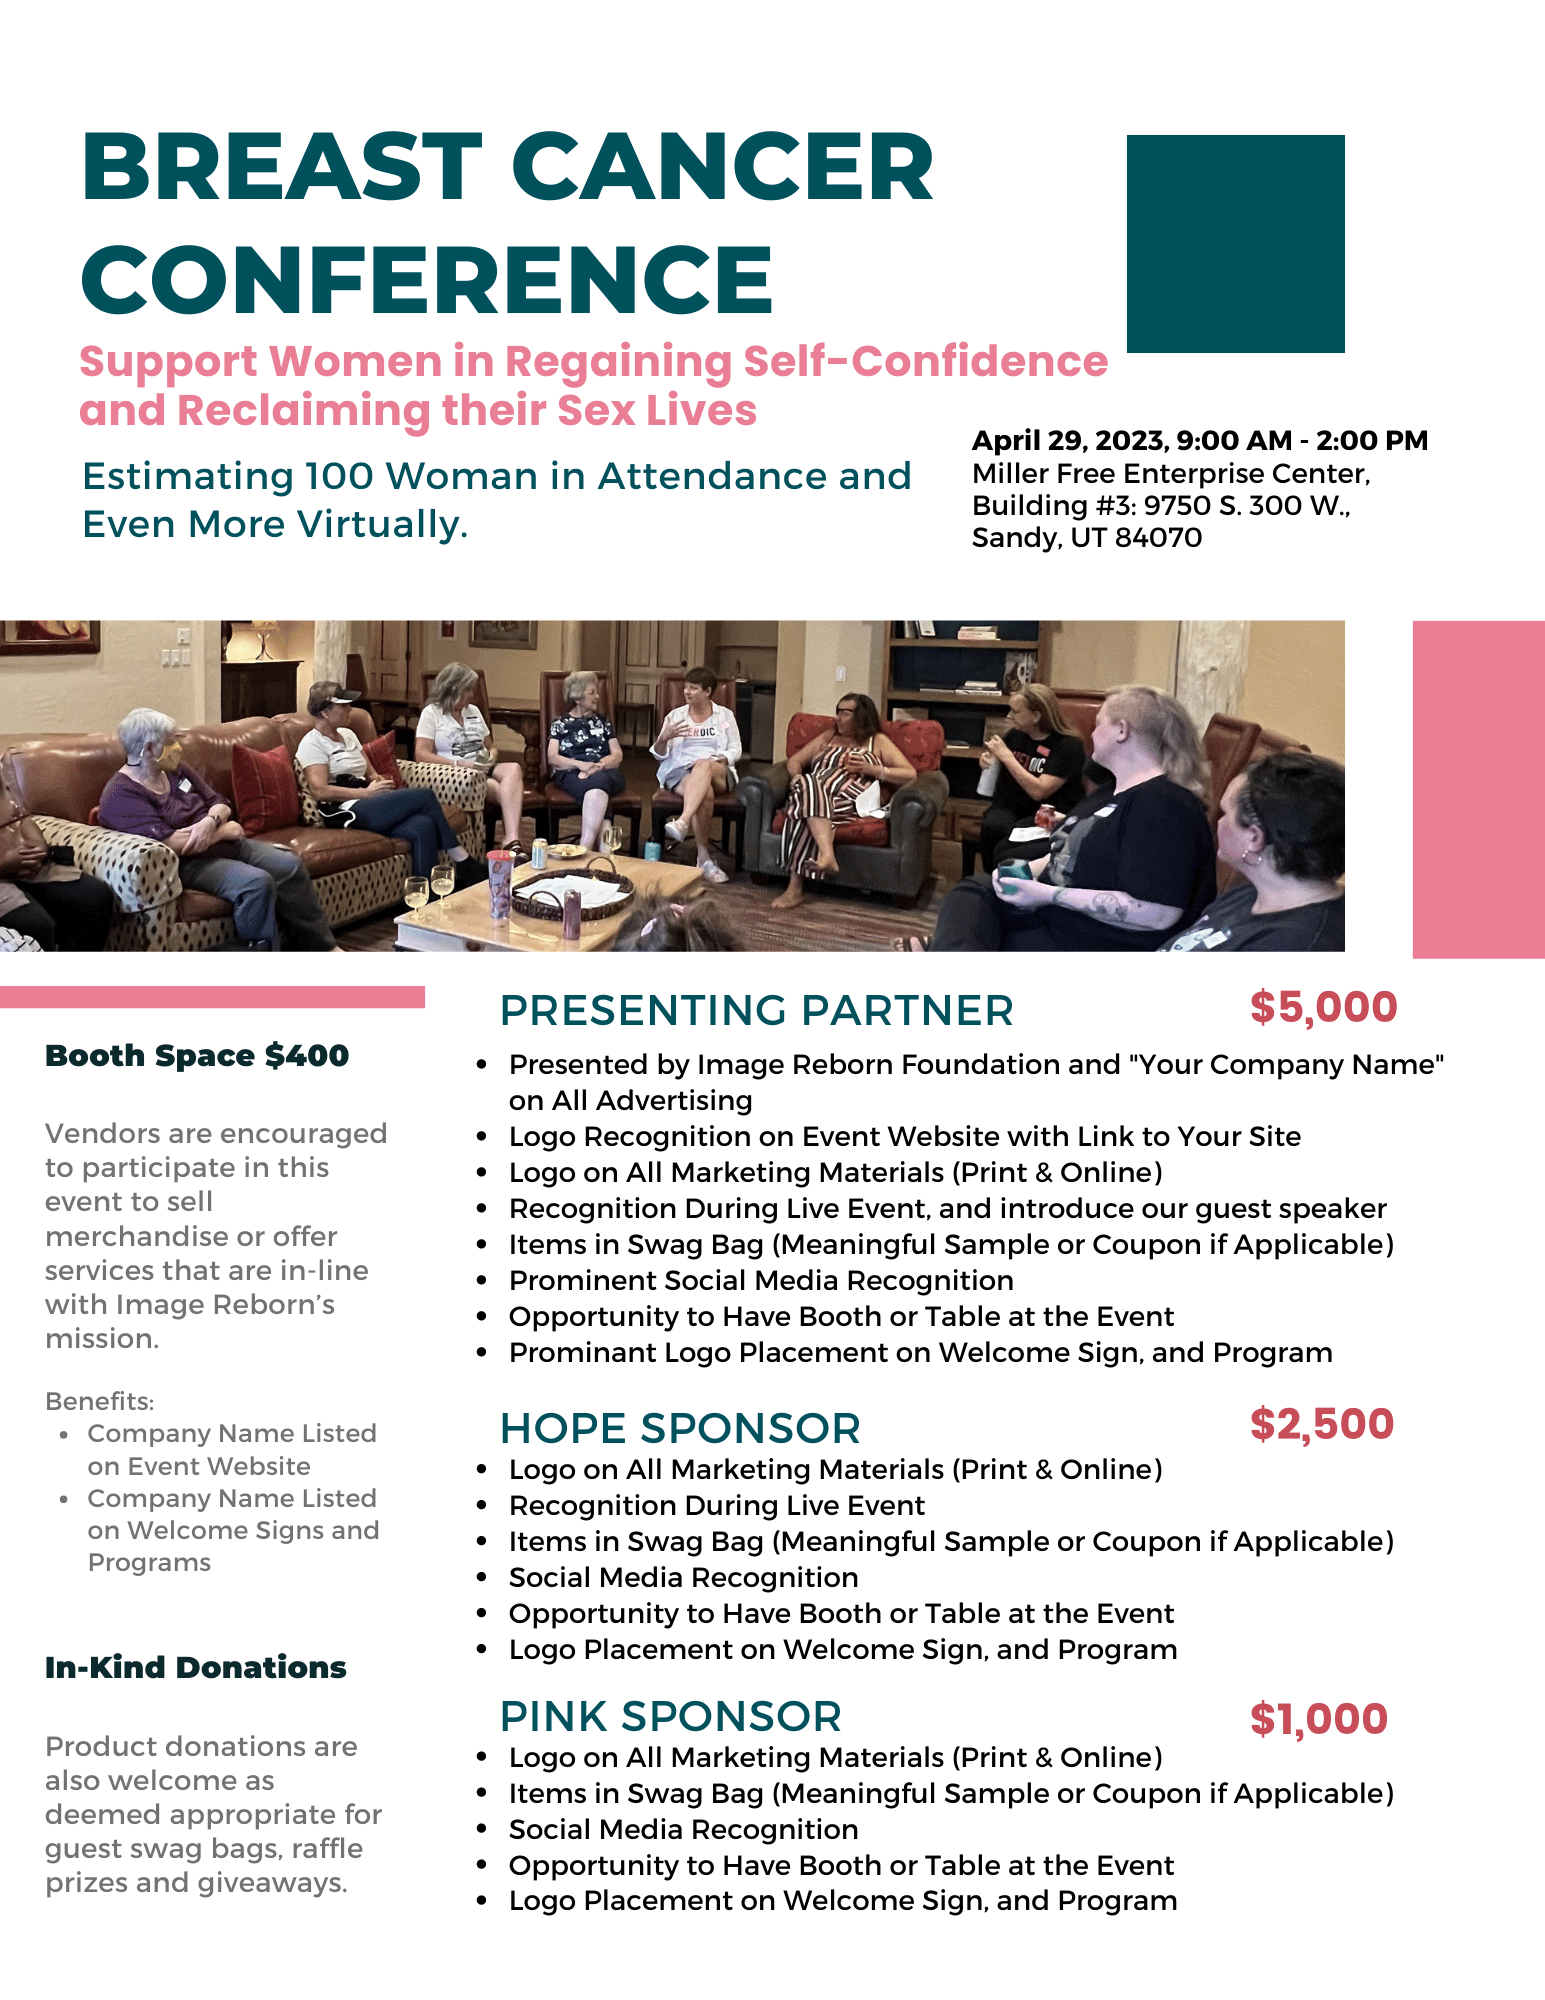 Image Reborn Foundation Breast Cancer Conference Sponsorship Info